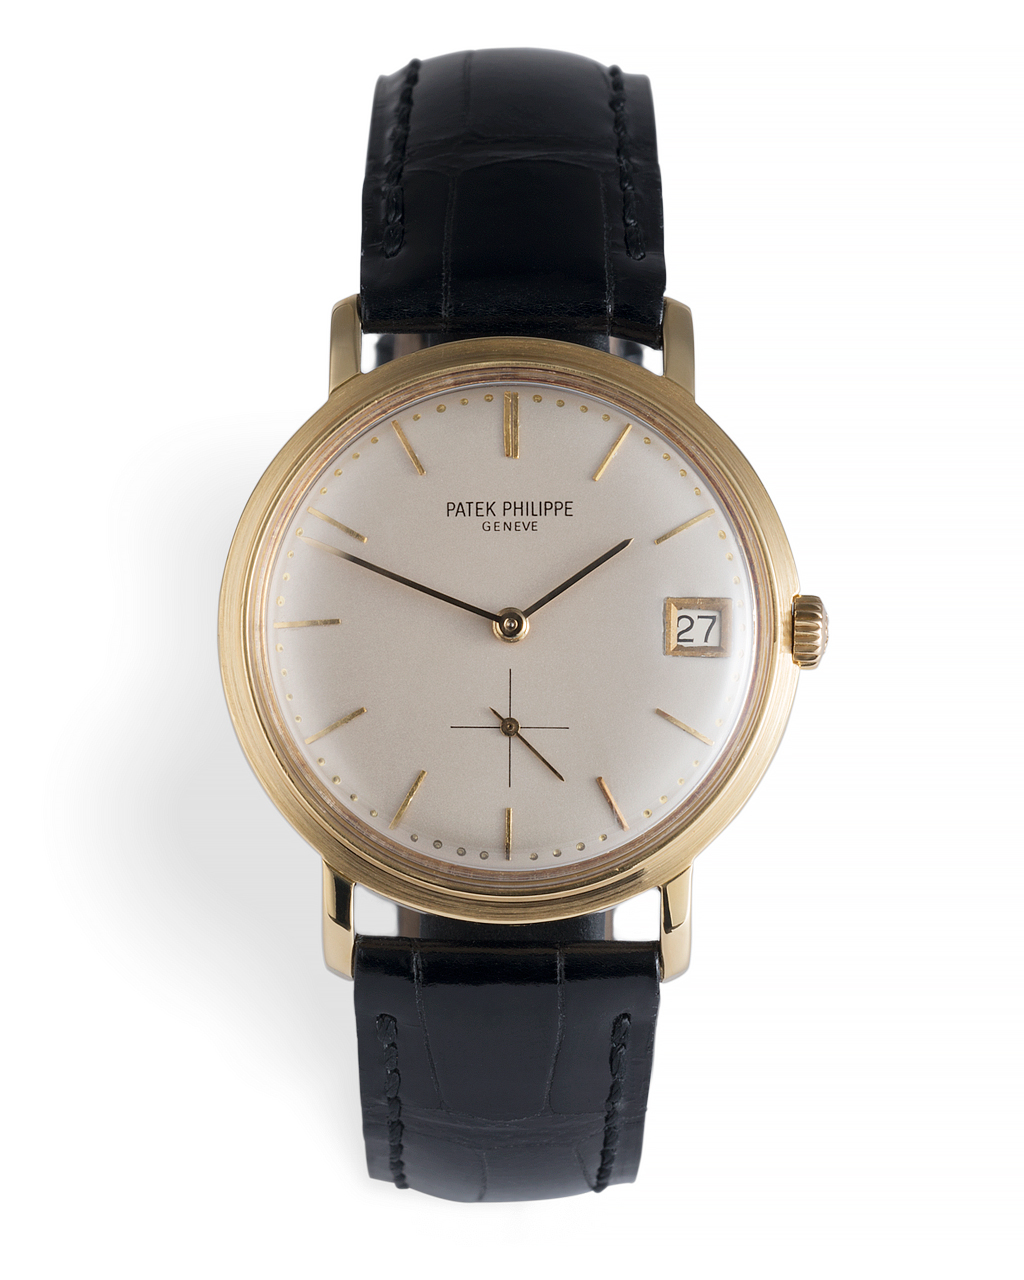 Patek Philippe Calatrava Watches | ref 3445 | Vintage Automatic | The ...